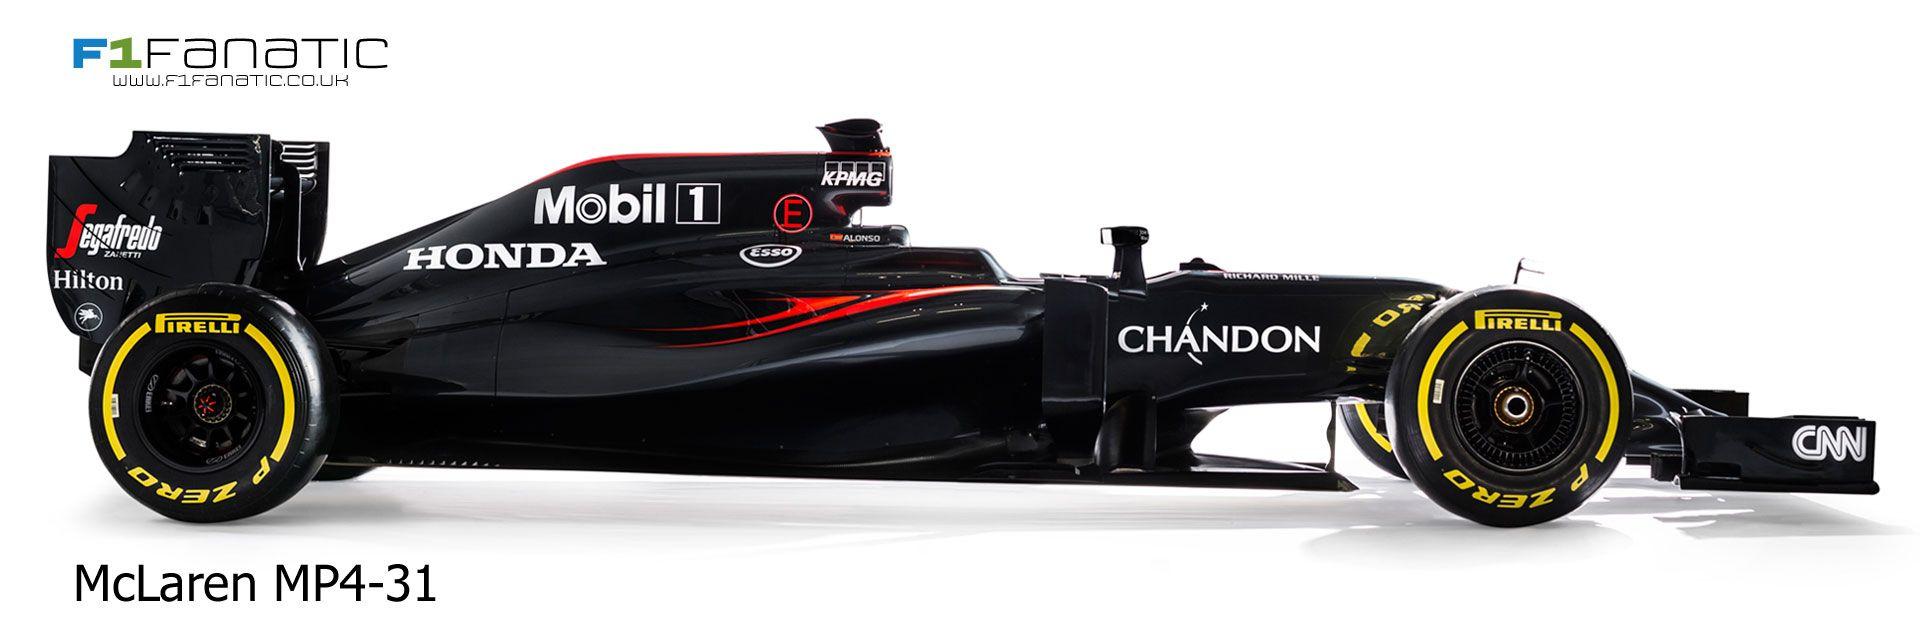 2016 McLaren F1 Logo - Compare McLaren's new MP4-31 with their 2015 car · RaceFans